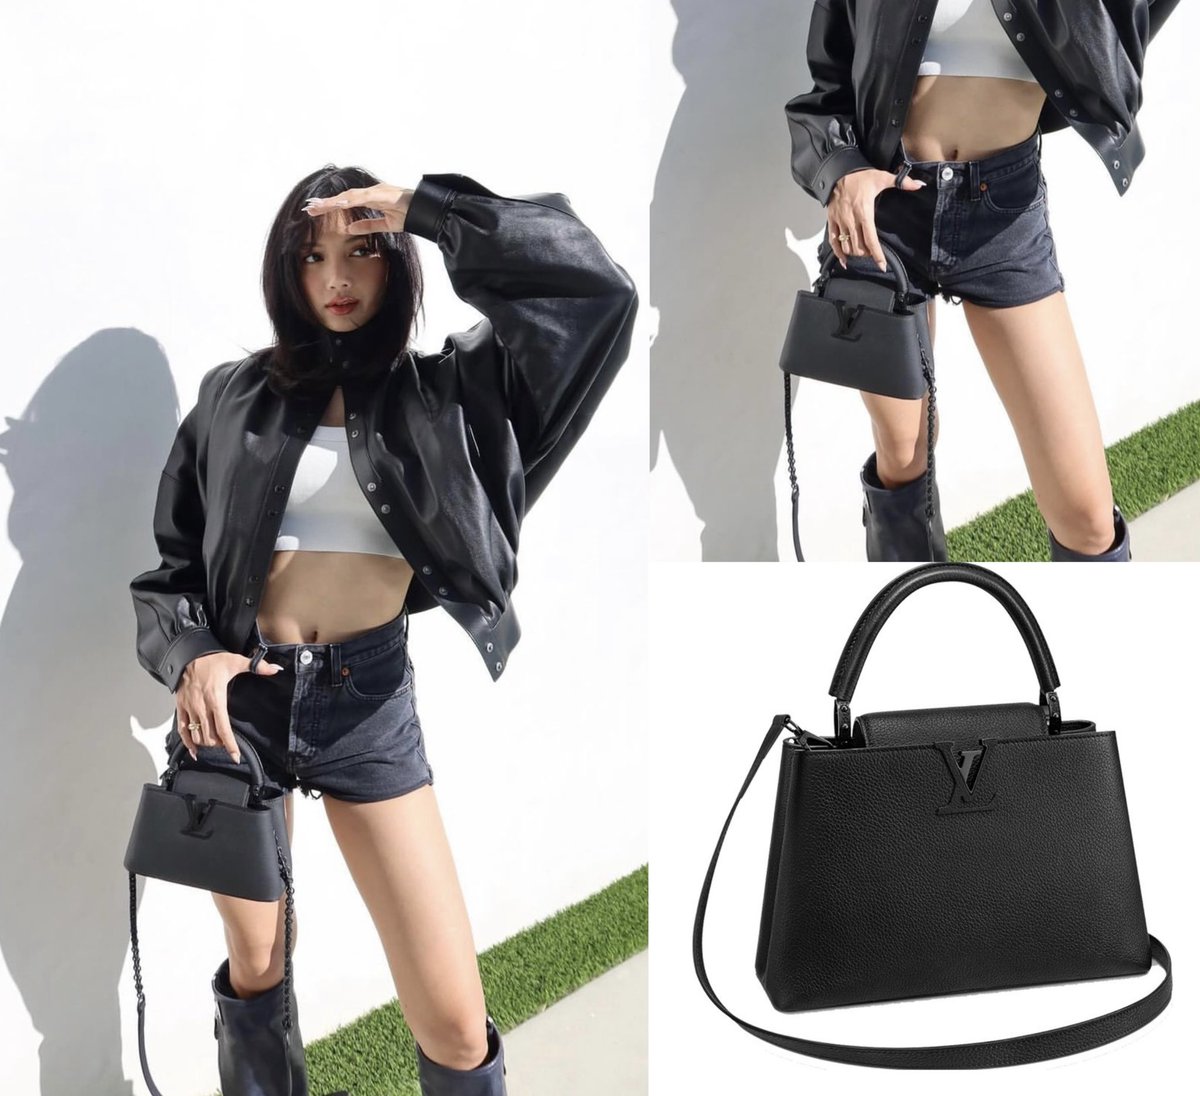 #LISA wearing LOUIS VUITTON ALL BLACK CAPUCINES Bag 
@LouisVuitton @wearelloud